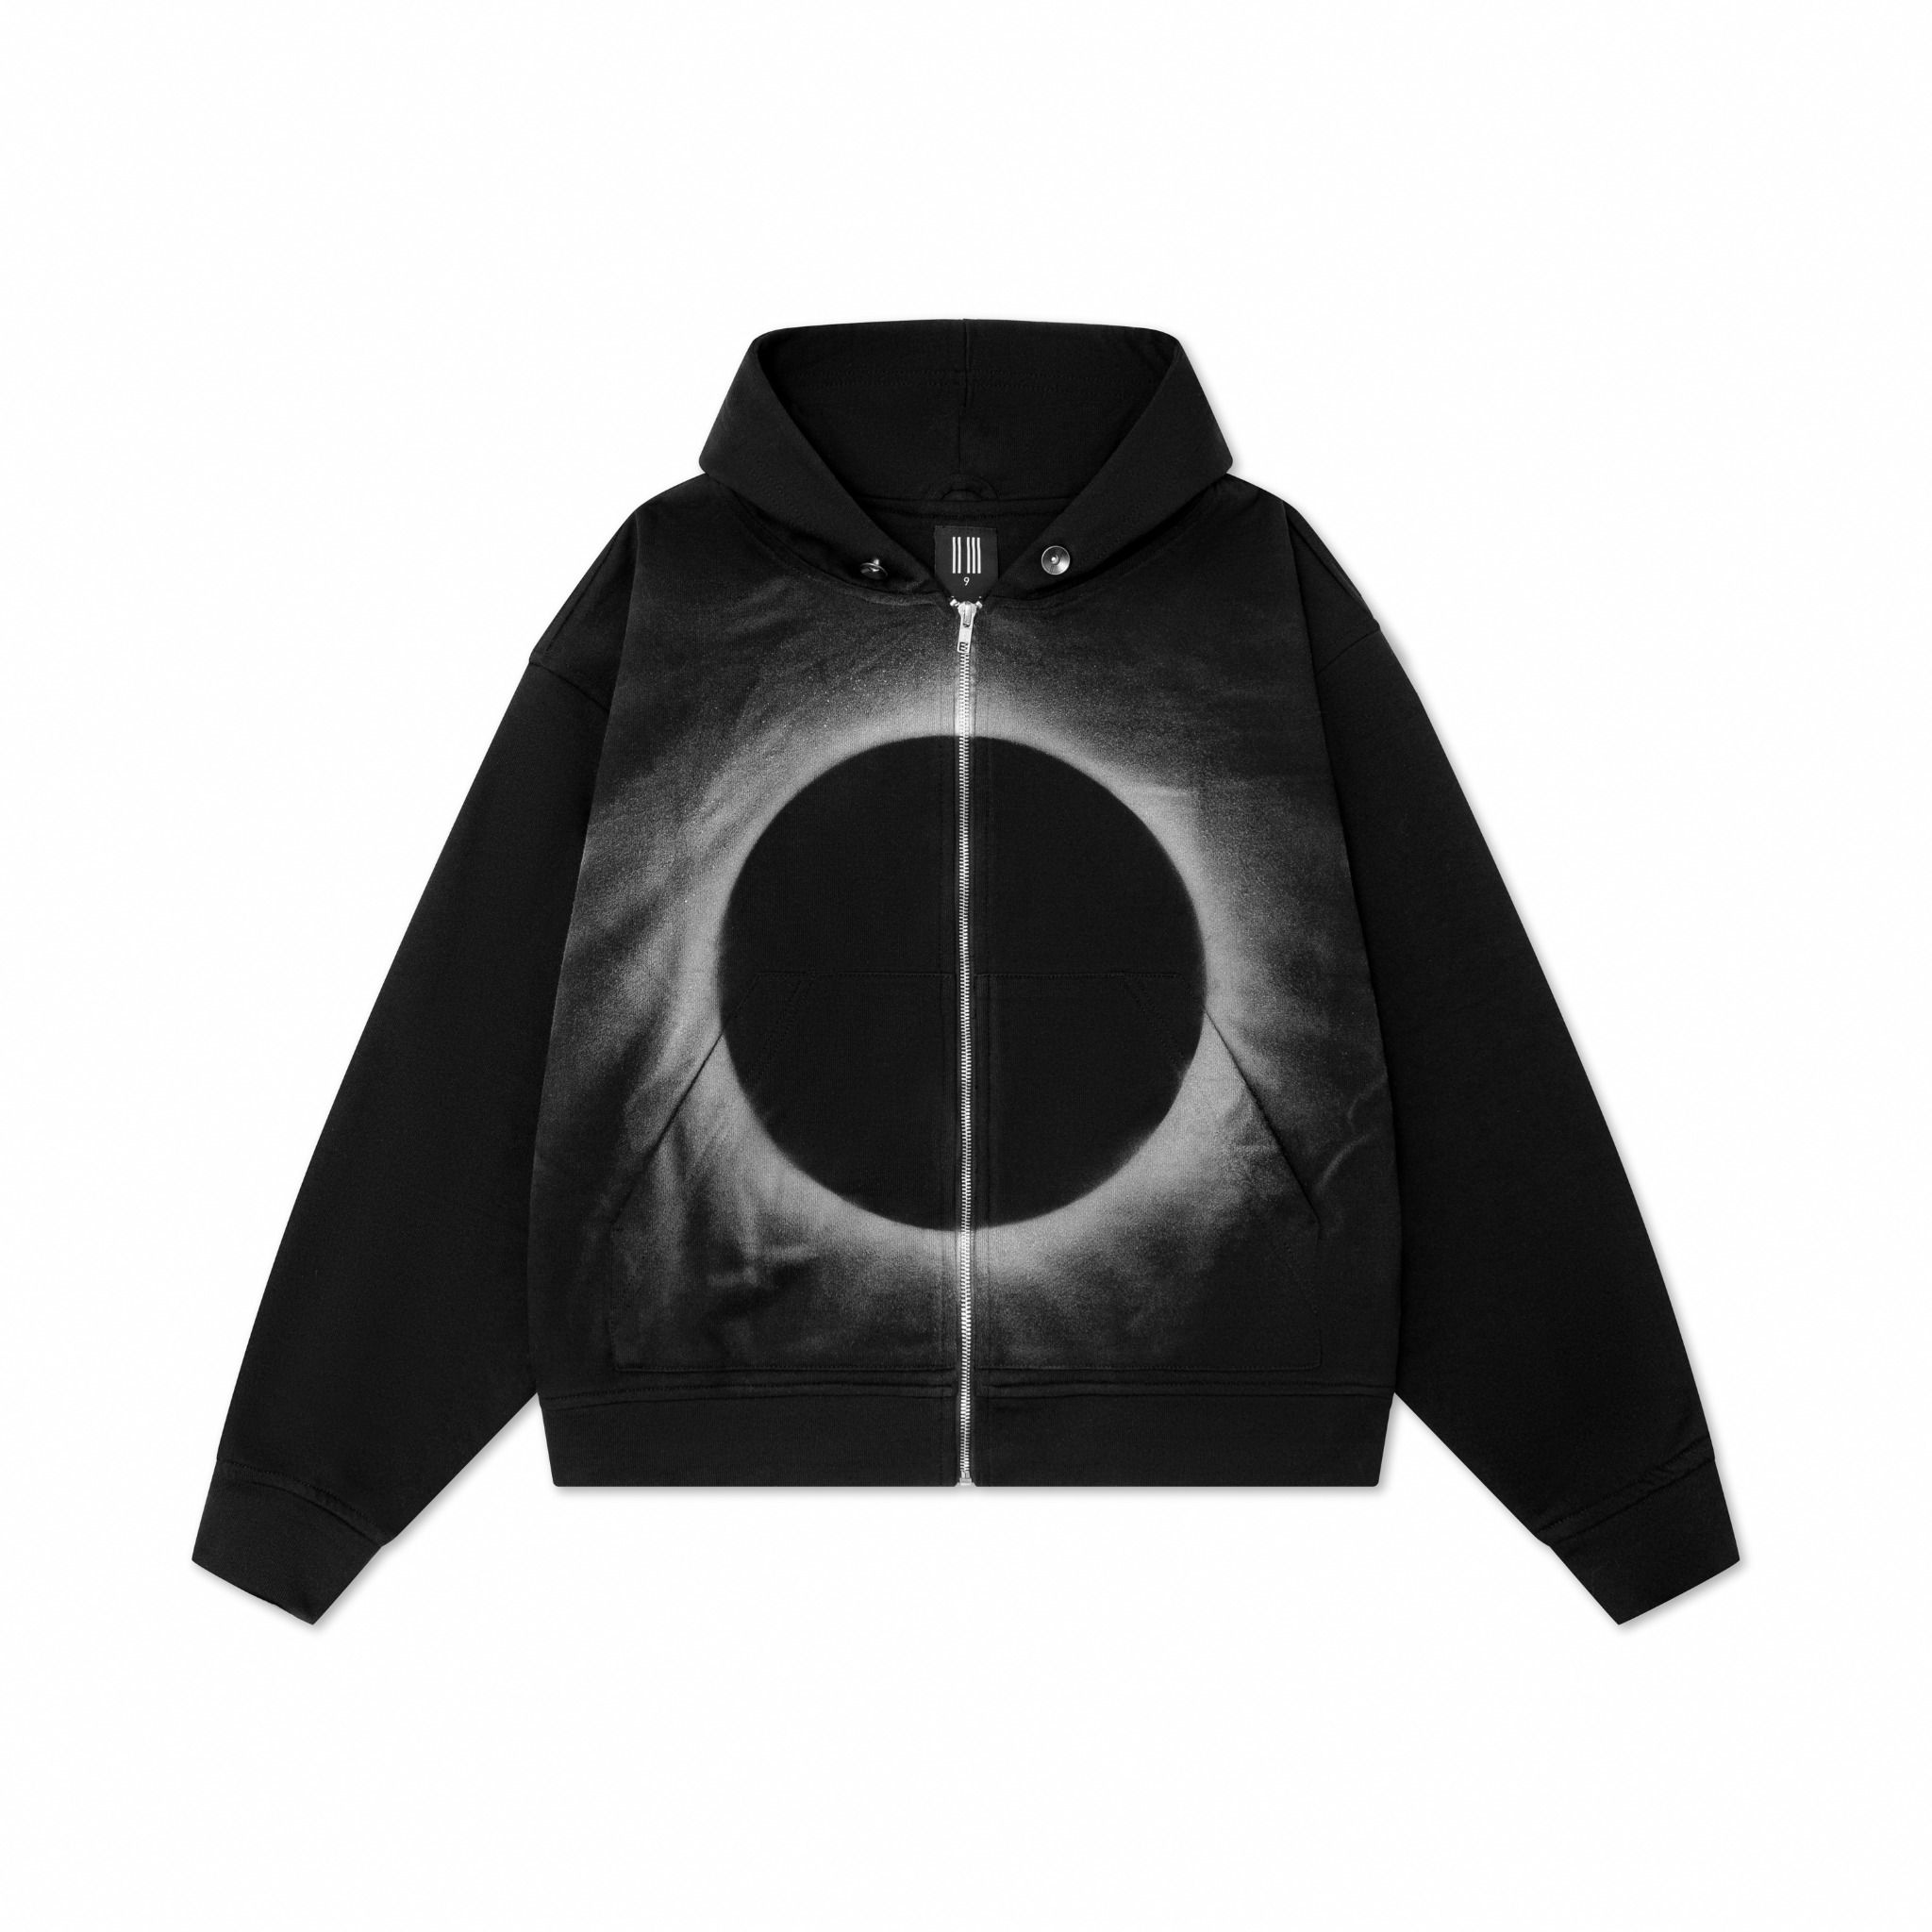  23'FZ hoodie / Black / Eclipse 